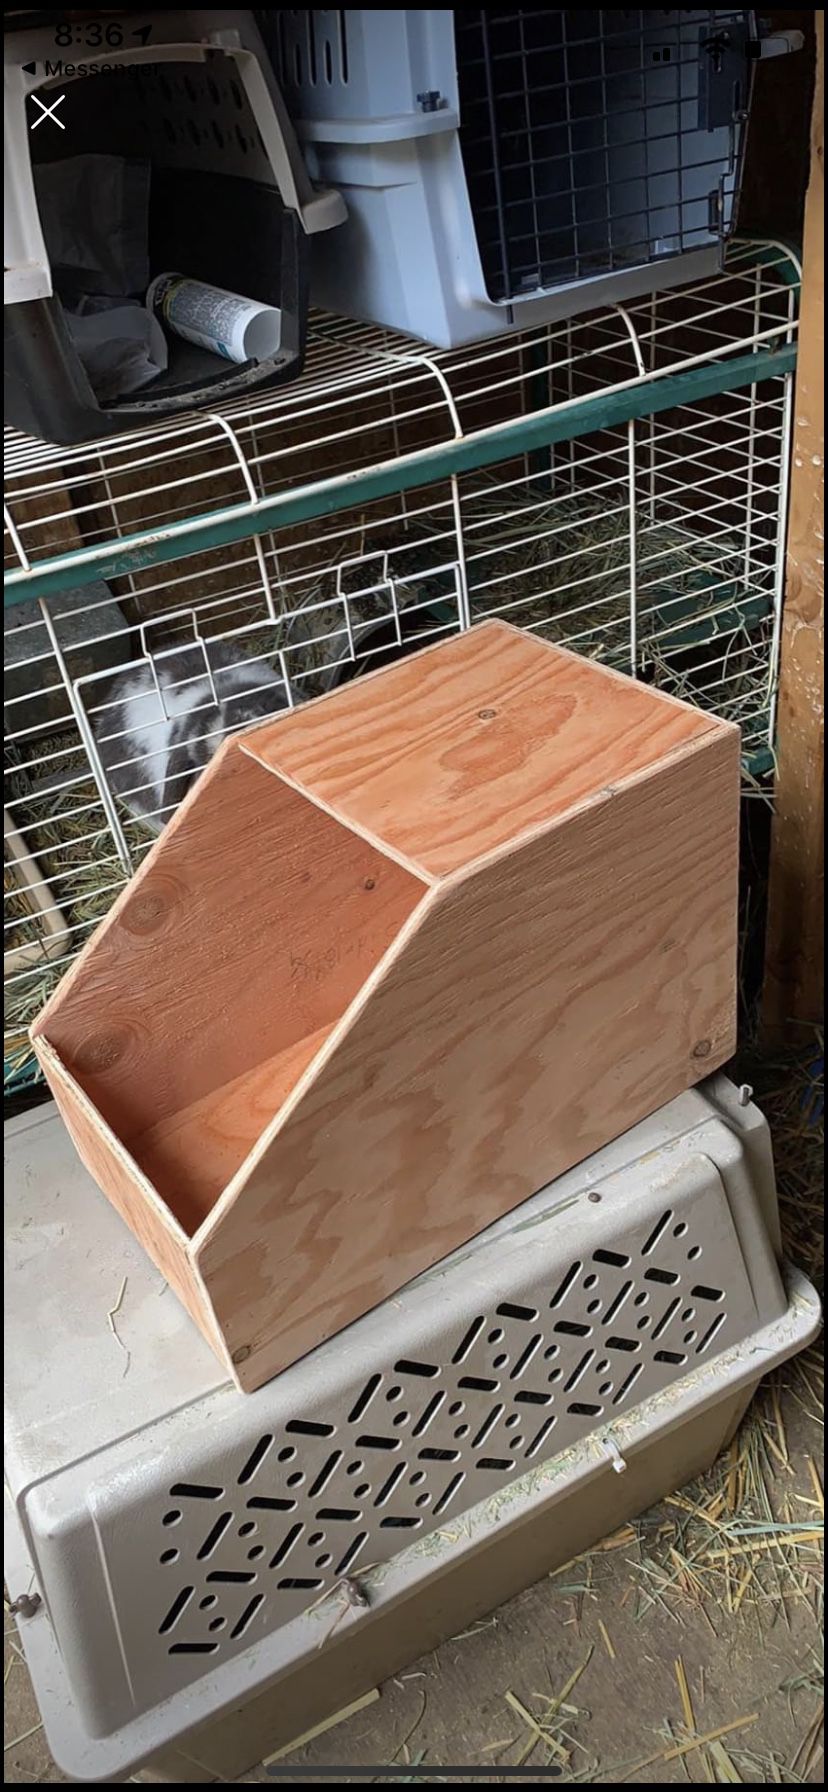 Bunny nesting boxes